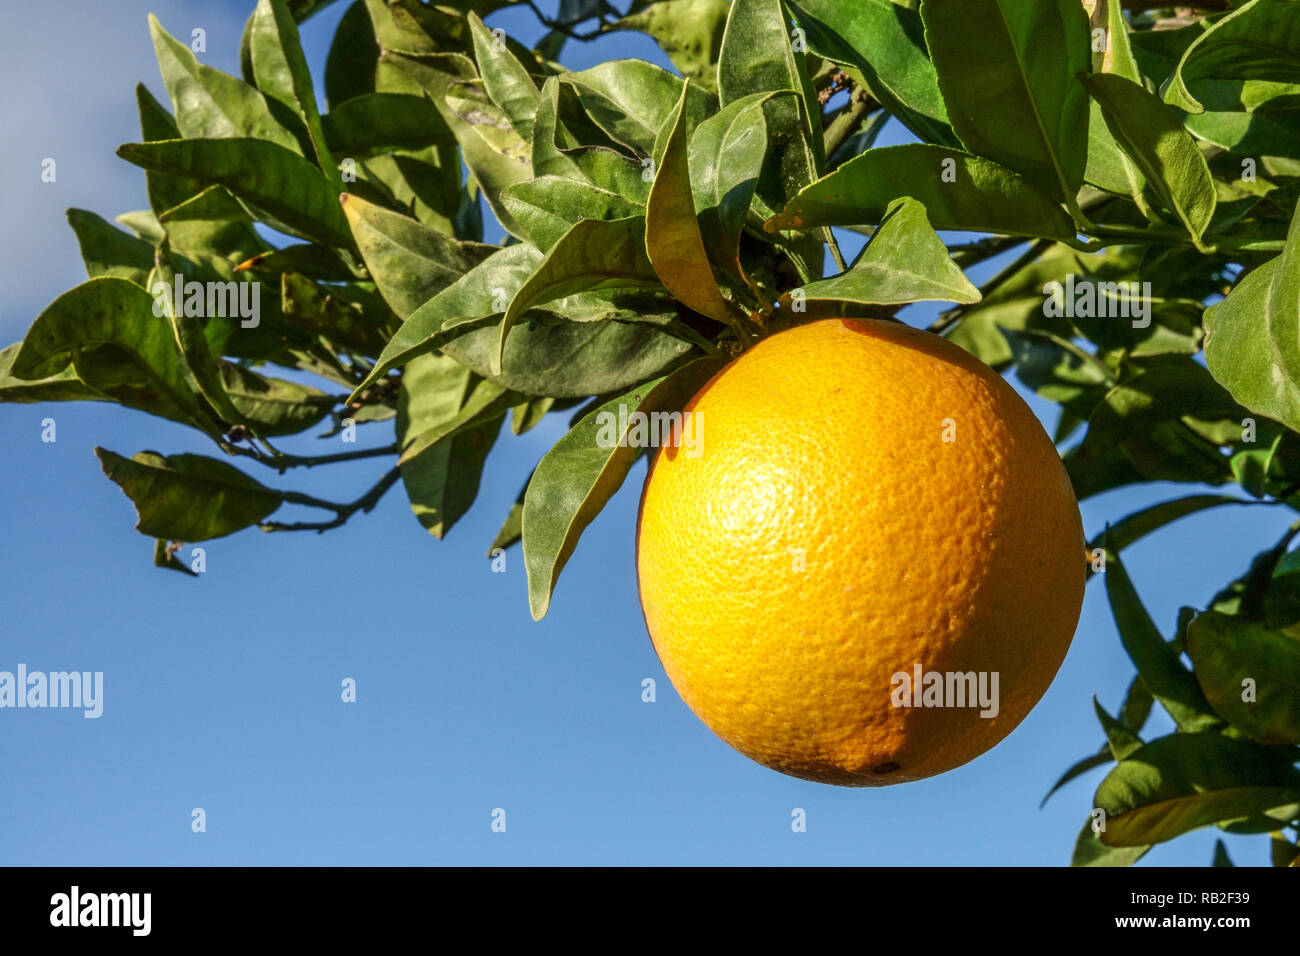 Ripening orange on tree branch, Valencia region, Spain Stock Photo